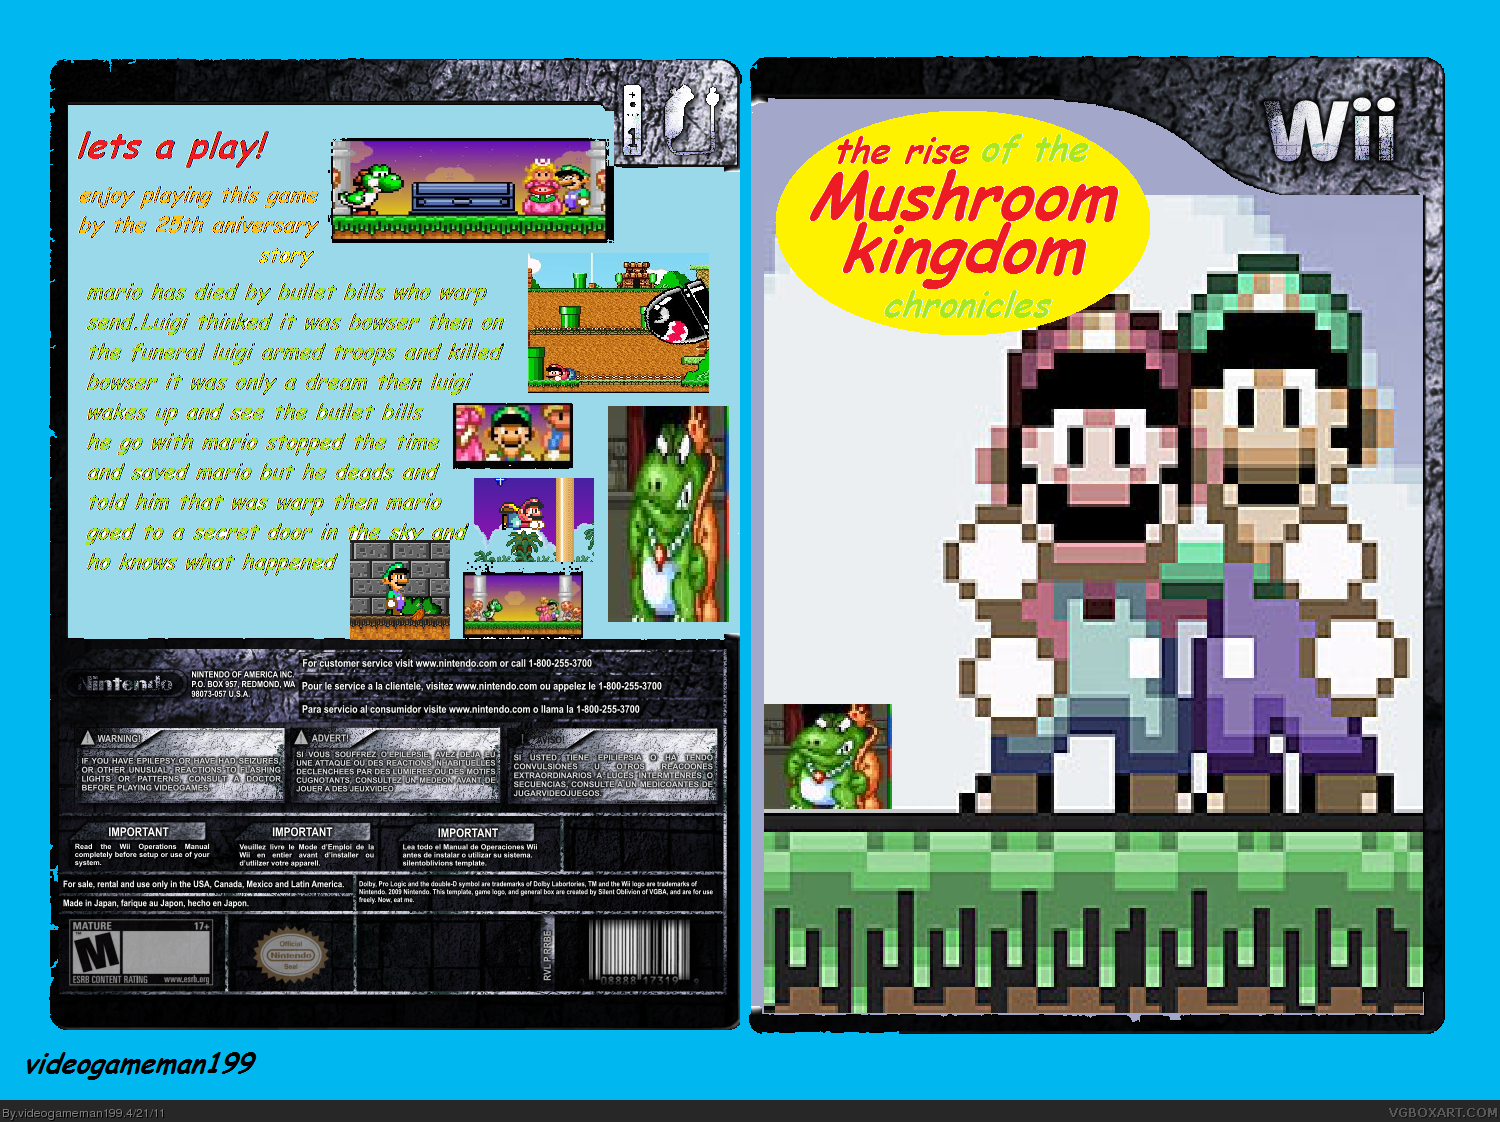 the rise of the mushroom kingdom chronicles box cover